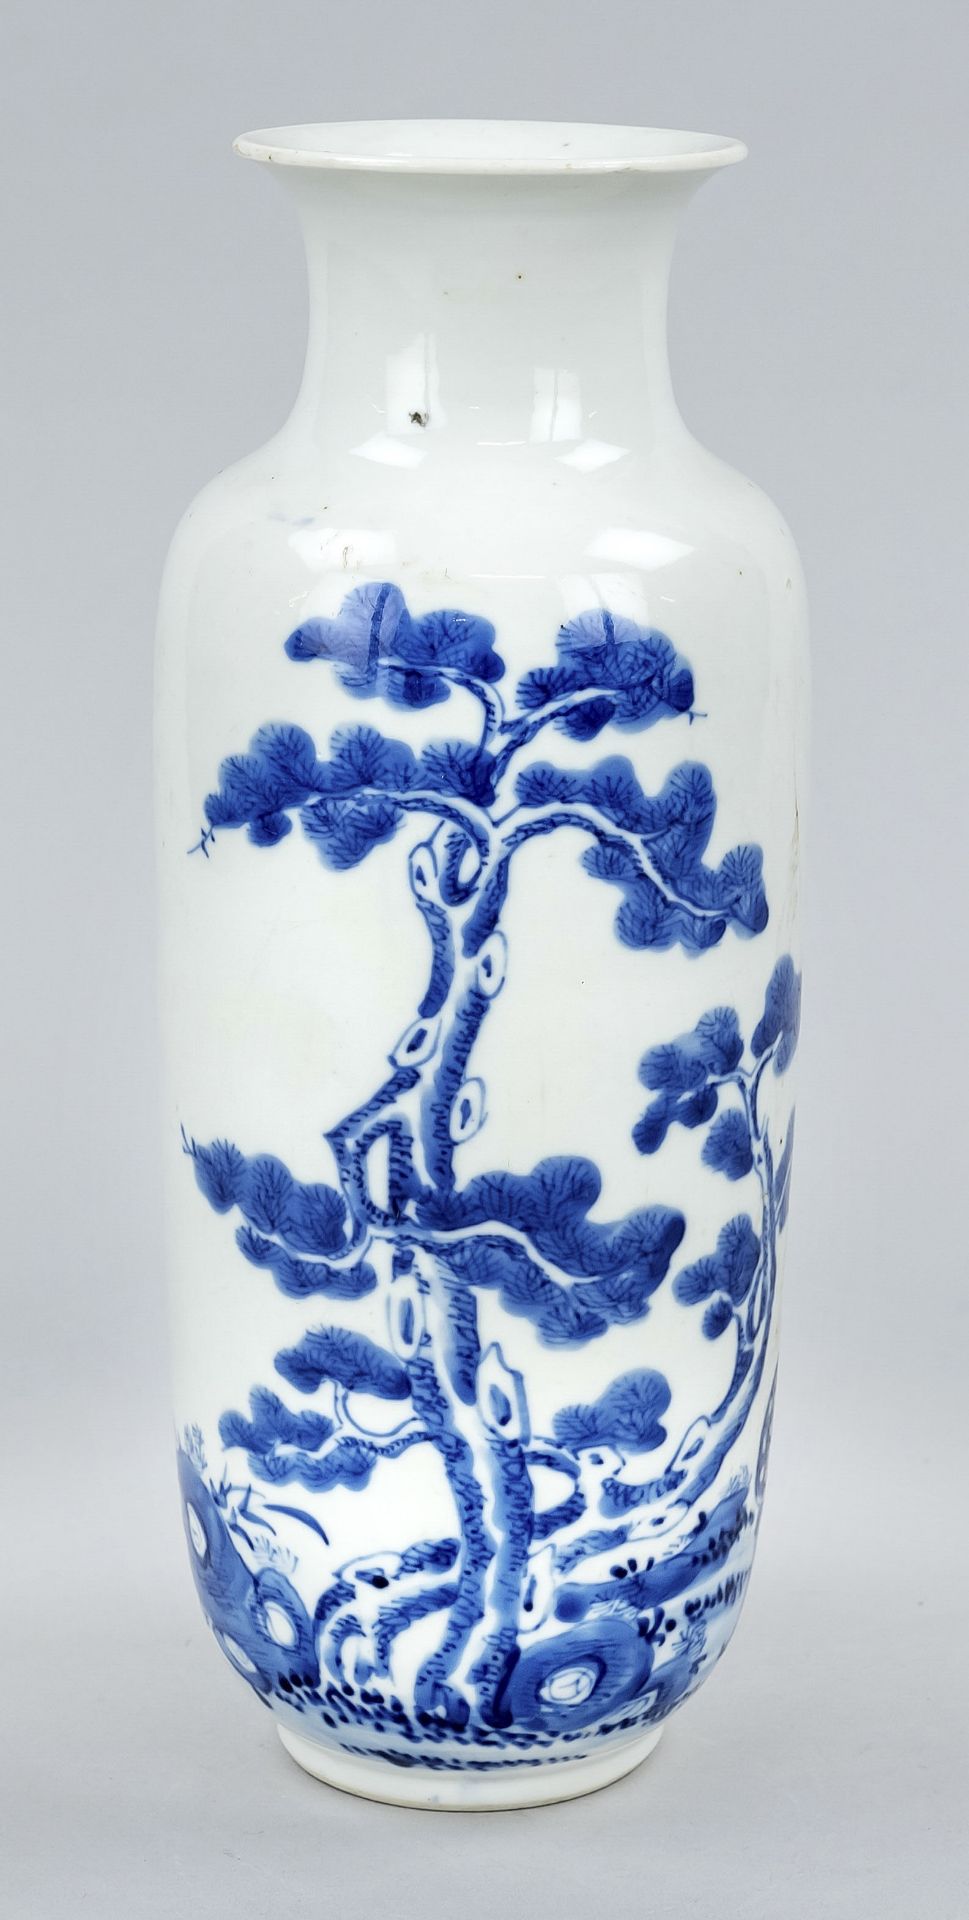 Rouleau vase, China, Qing dynasty(1644-1911), 18th century, porcelain with cobalt blue underglaze